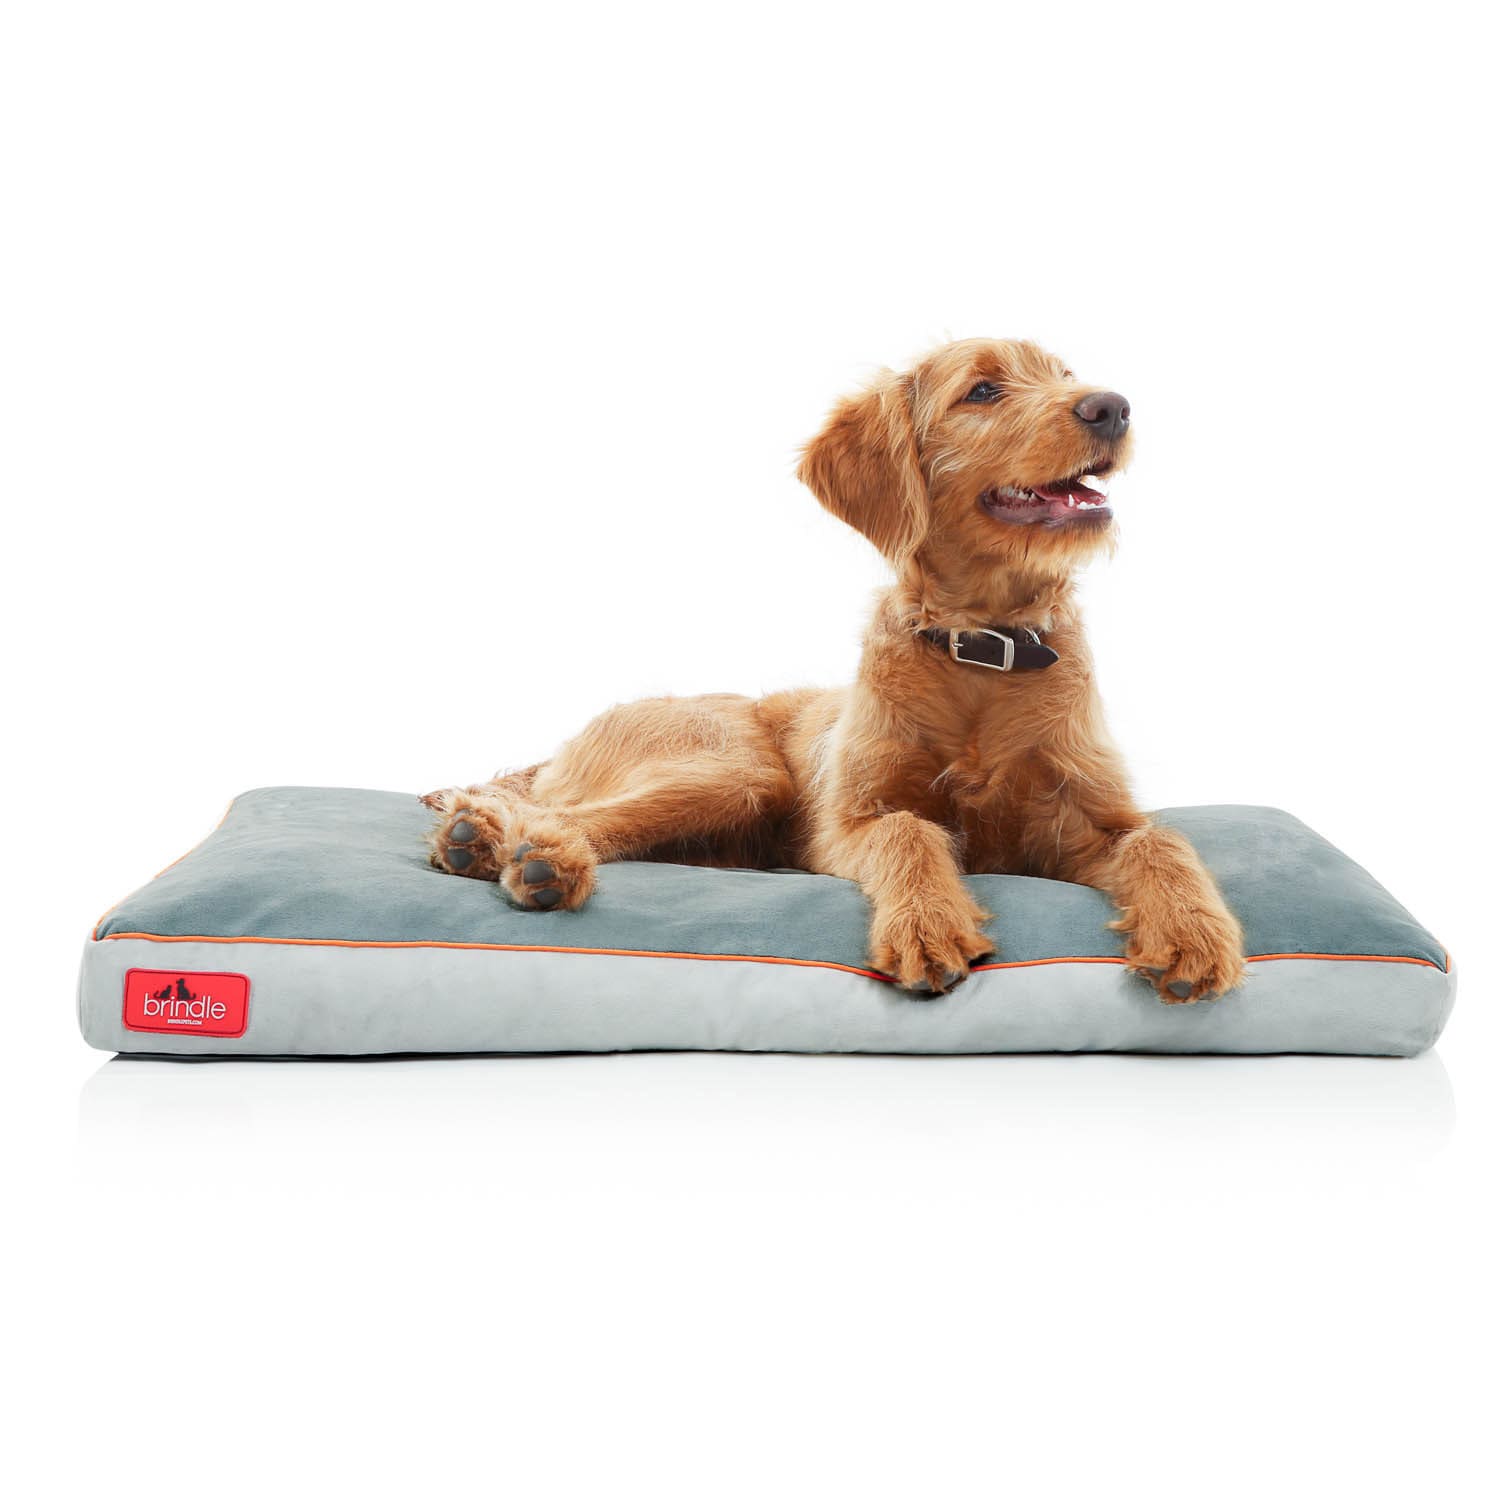 washable dog beds on sale